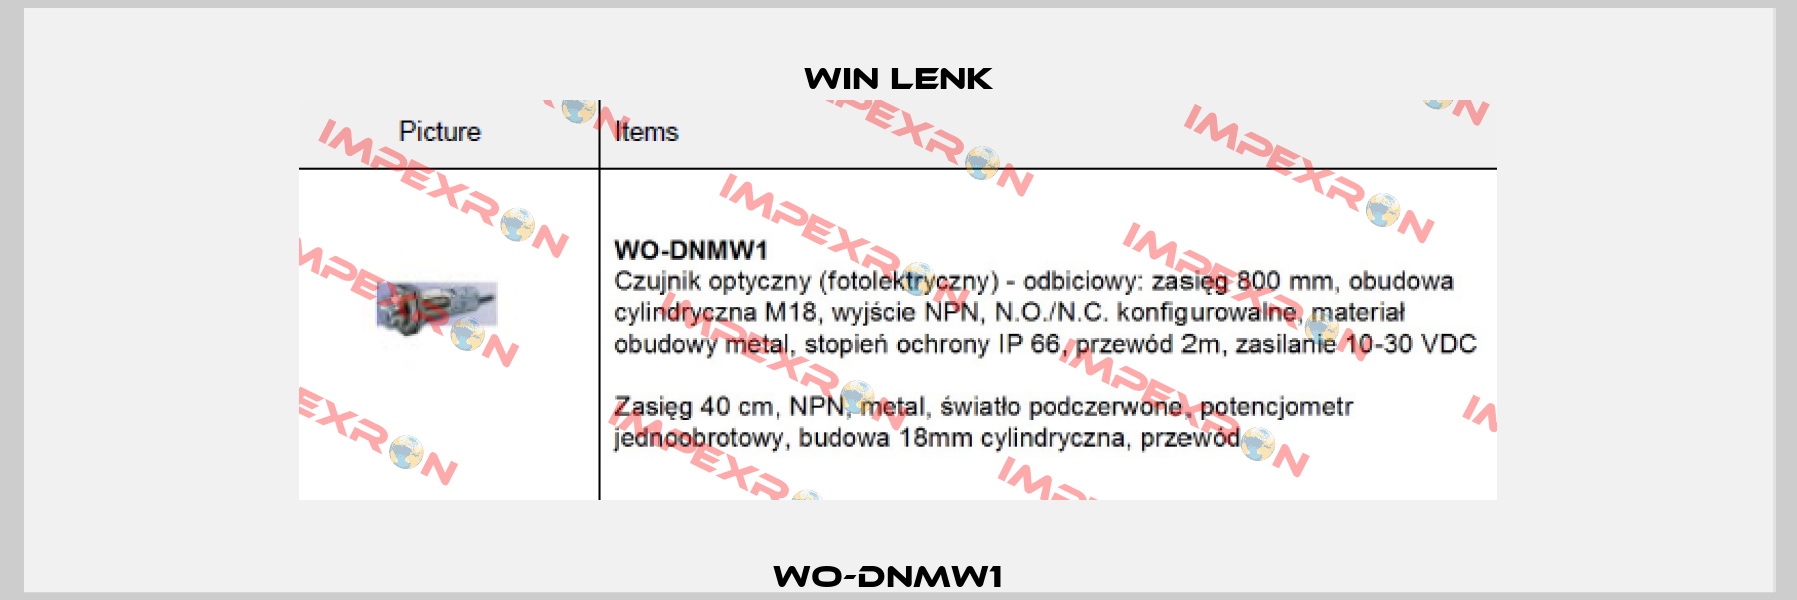 WO-DNMW1   Win Lenk